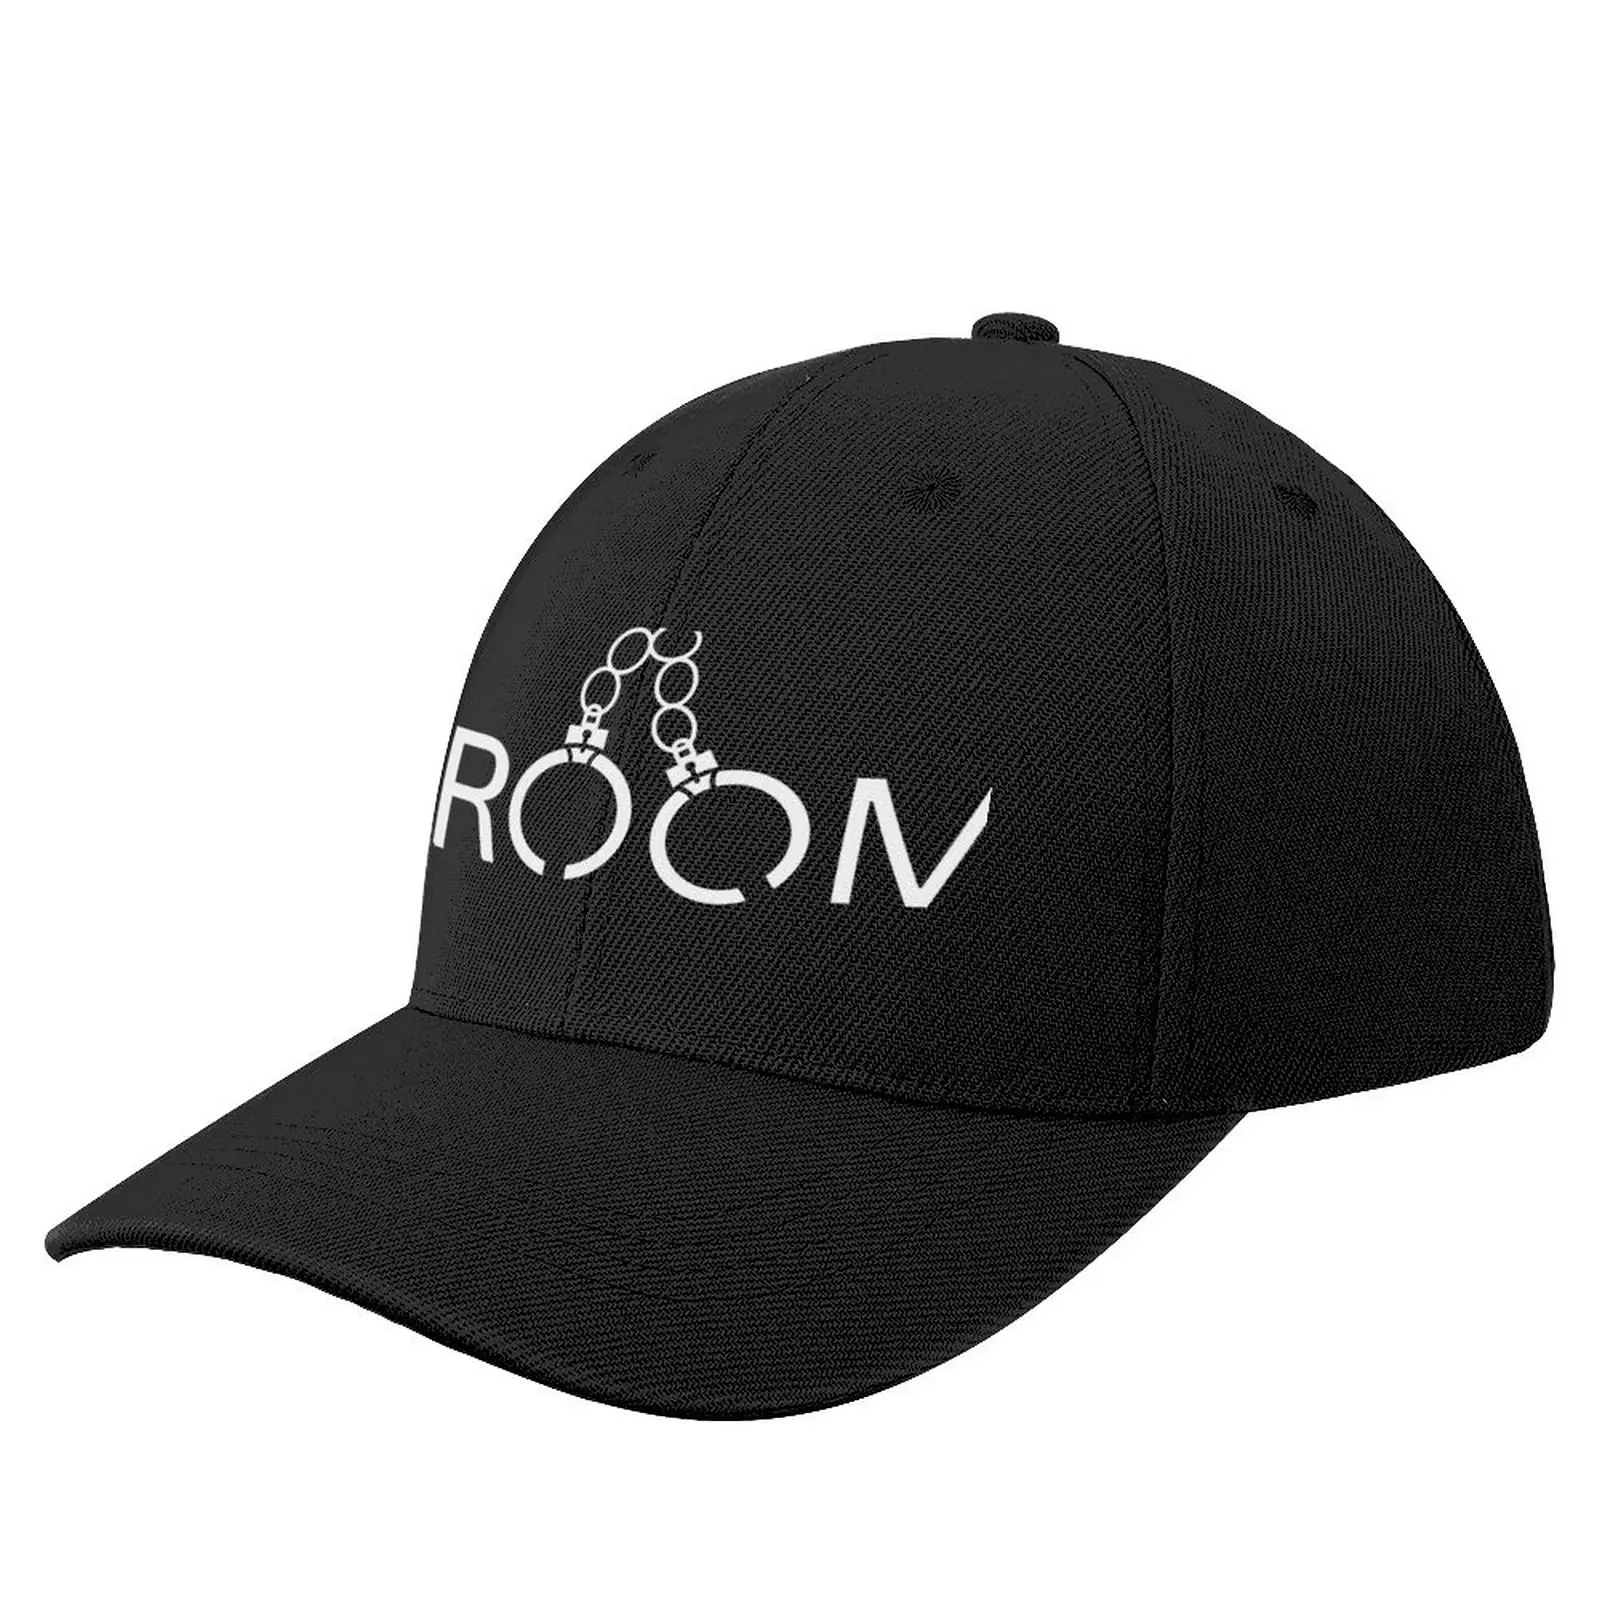 

Groom handcuff - funny Baseball Cap Mountaineering beach hat Thermal Visor Cap For Men Women'S